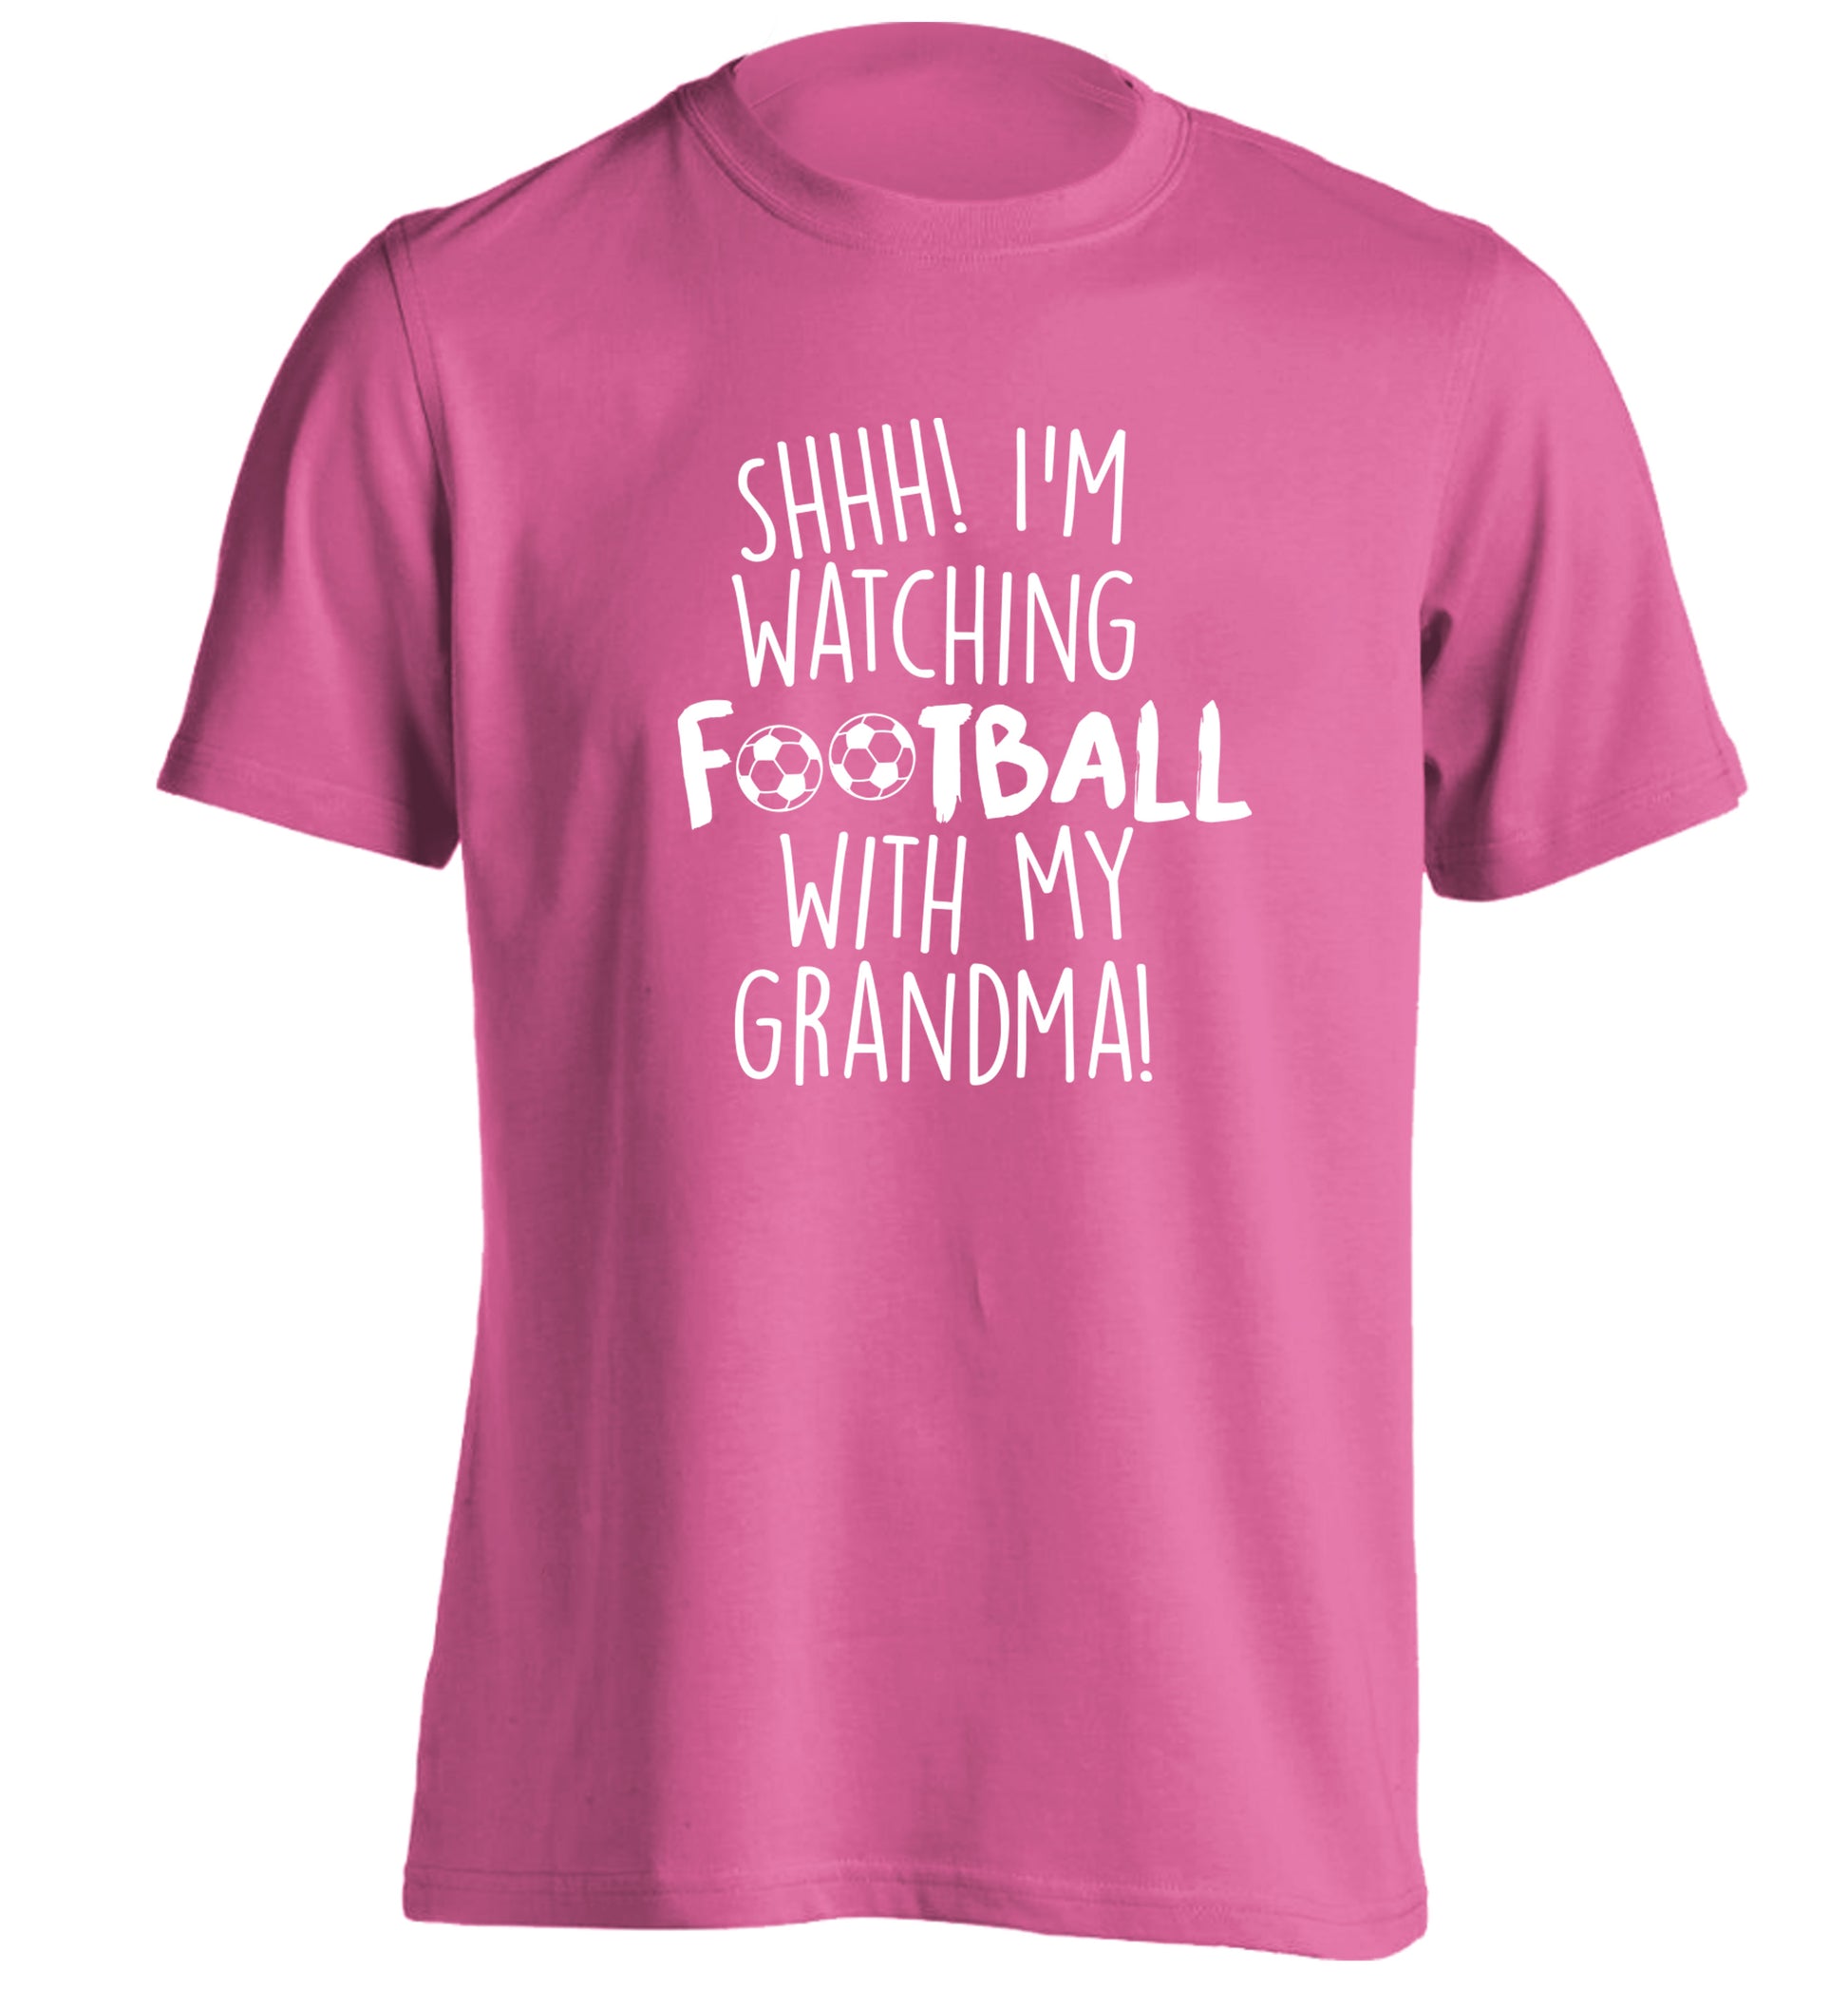 Shhh I'm watching football with my grandma adults unisexpink Tshirt 2XL